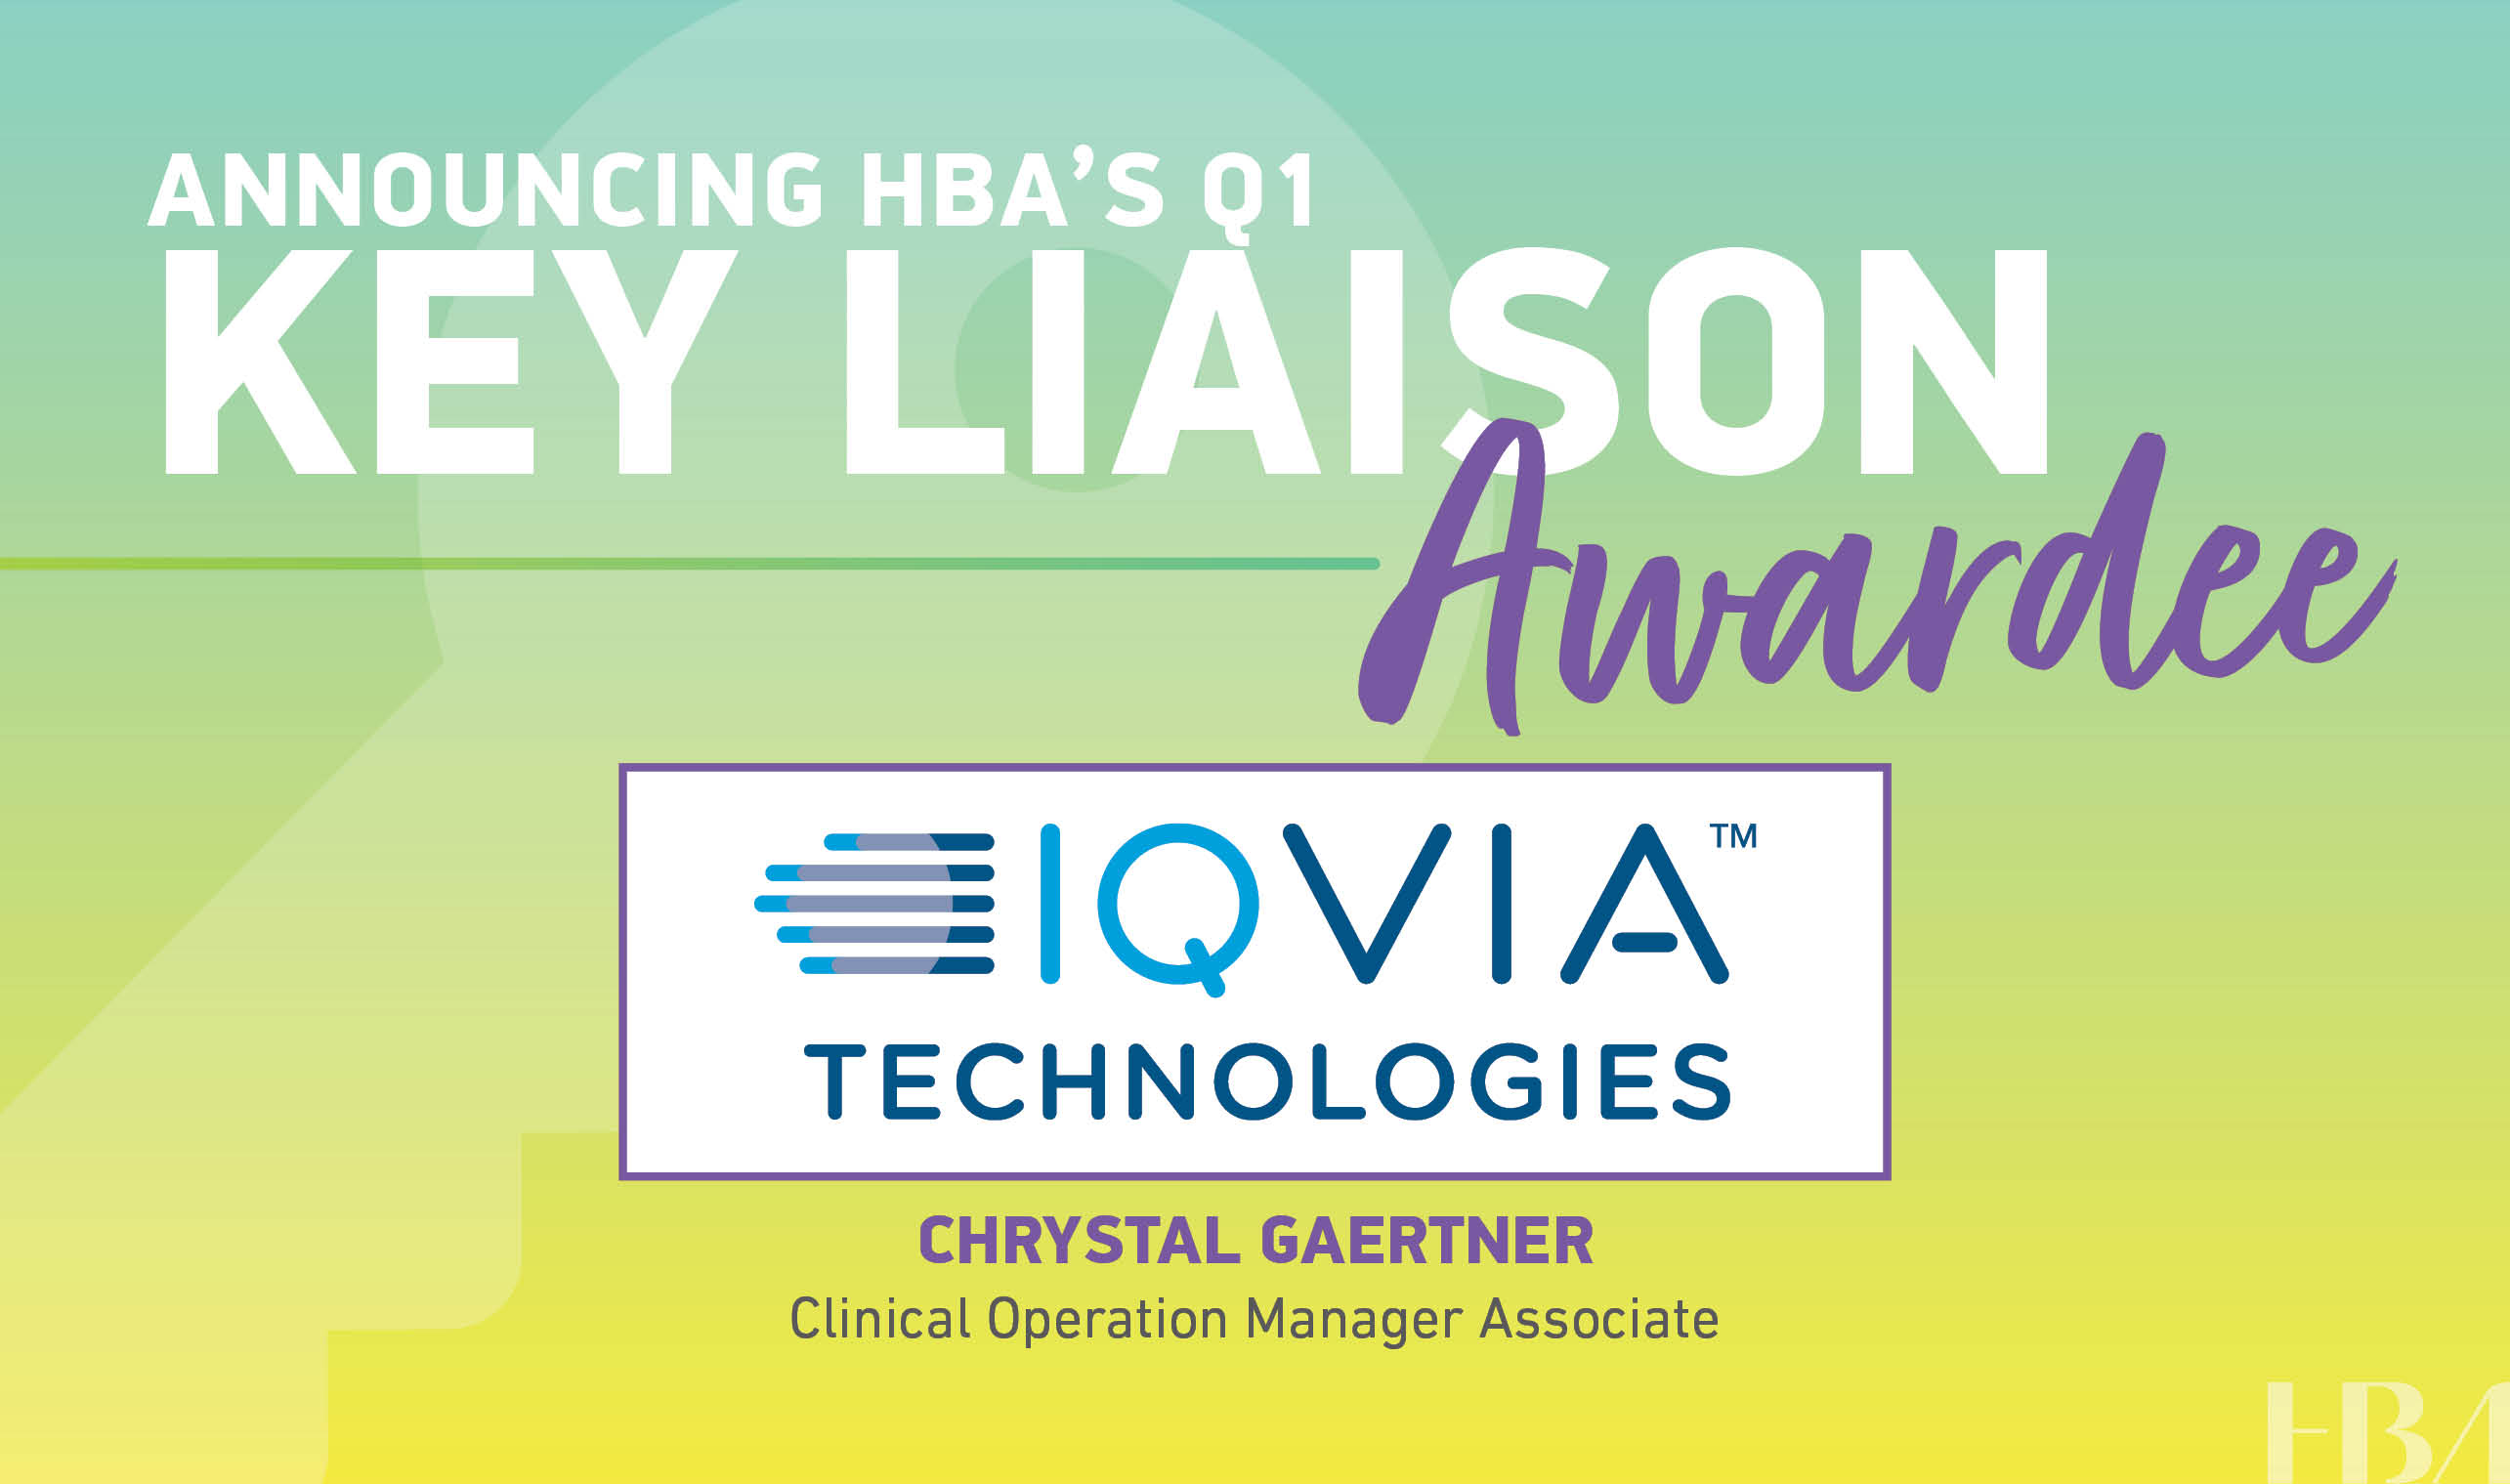 HBA Q1 Key Liaison Awardee